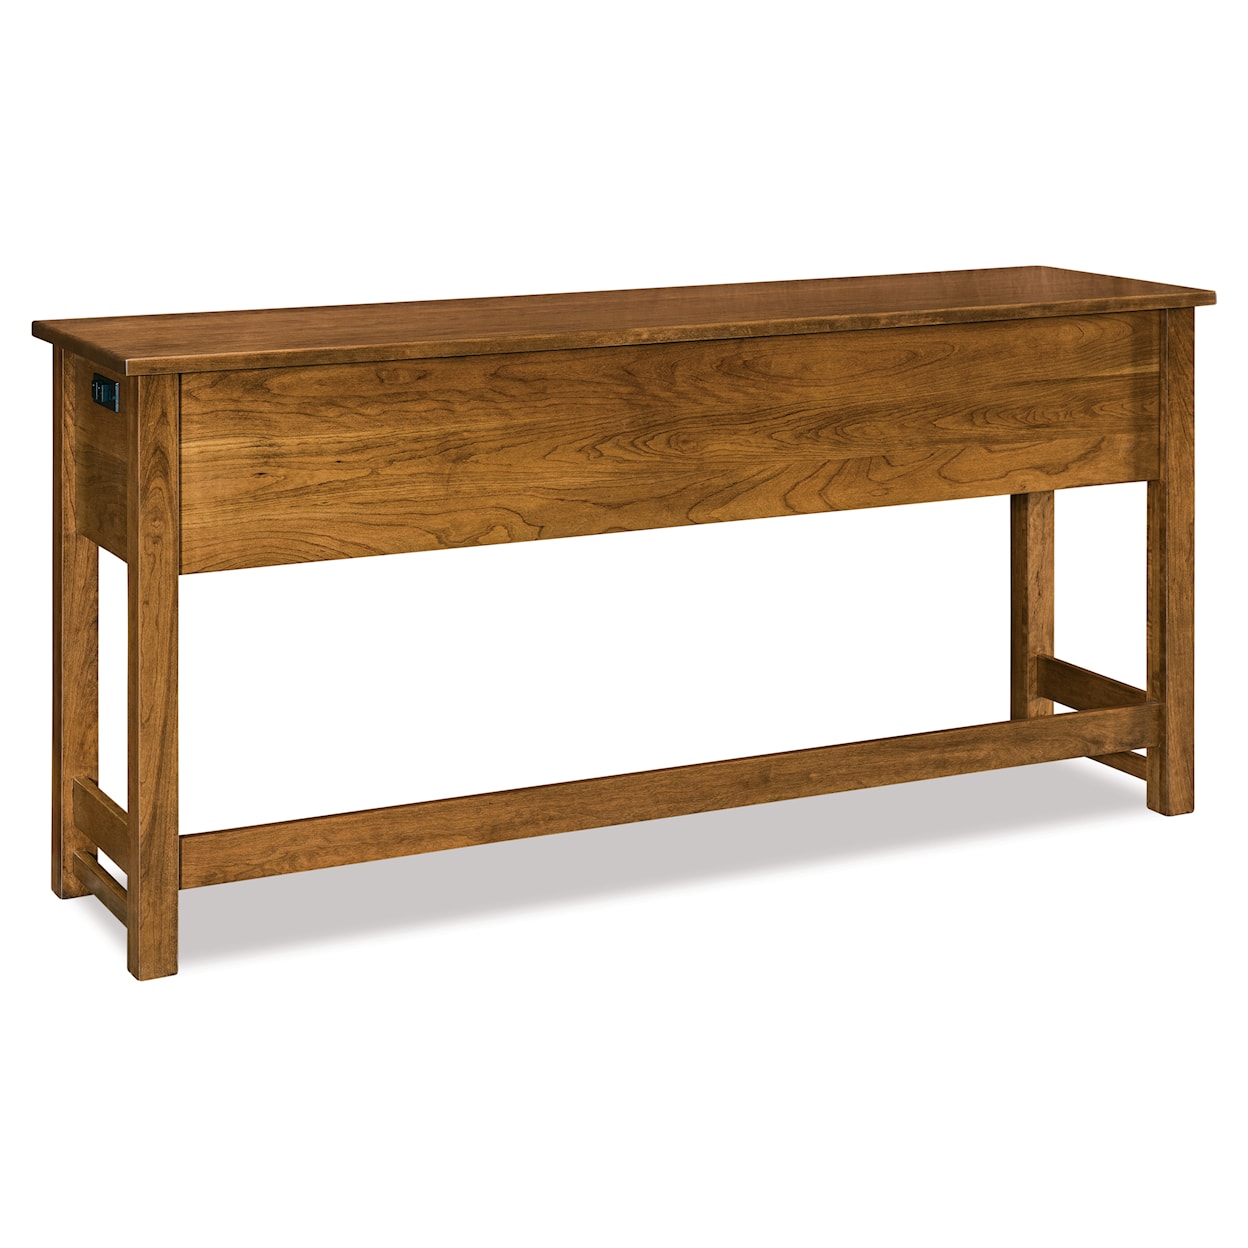 Archbold Furniture Bob Timberlake Counter-Height Wall Table